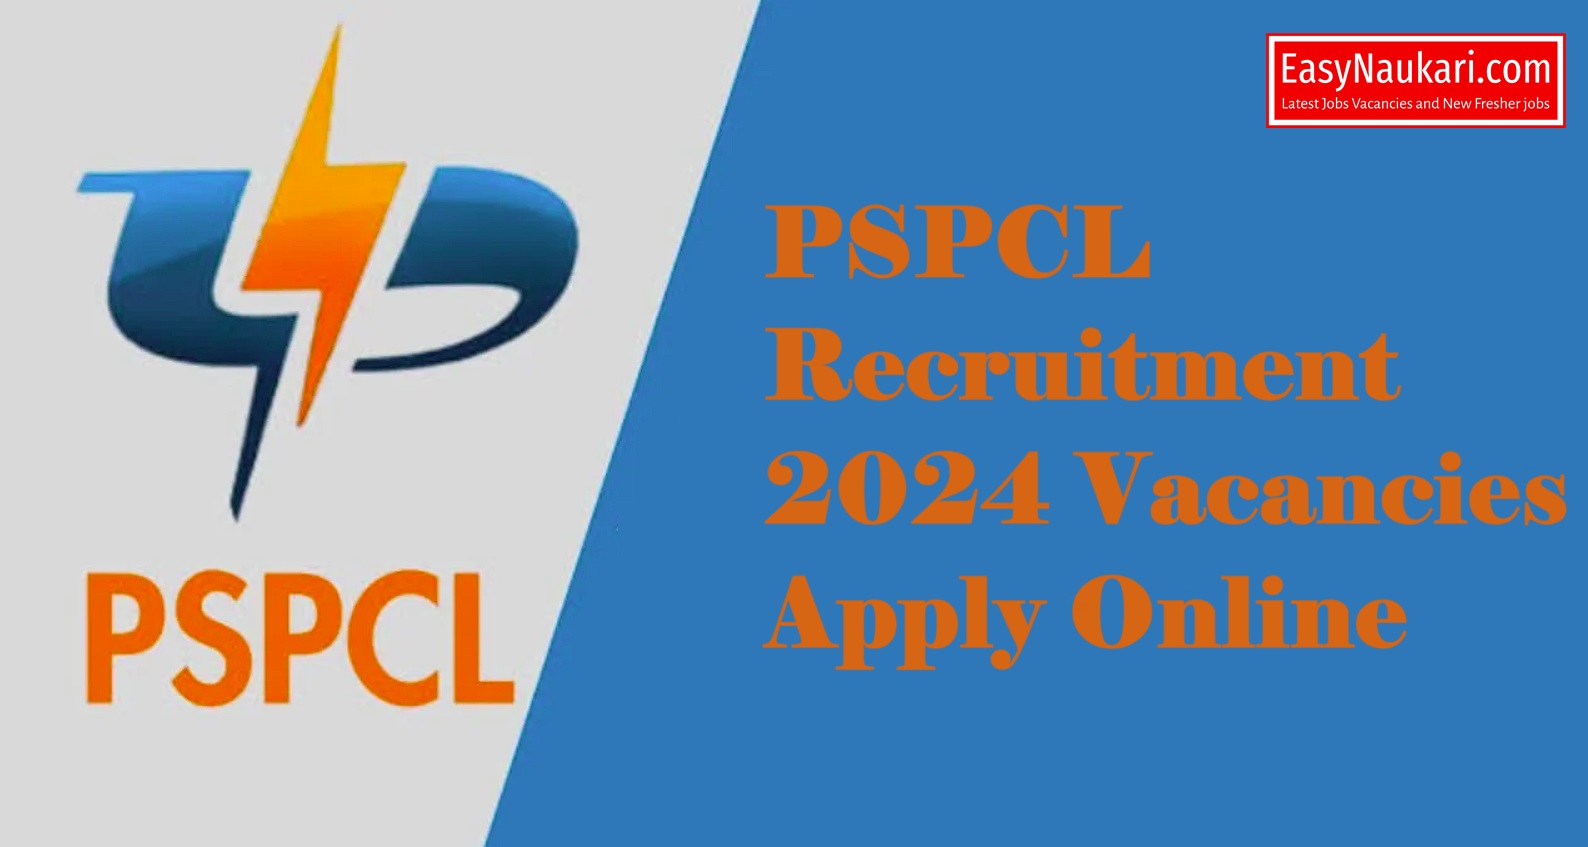 PSPCL Recruitment 2024 Vacancies Apply Online